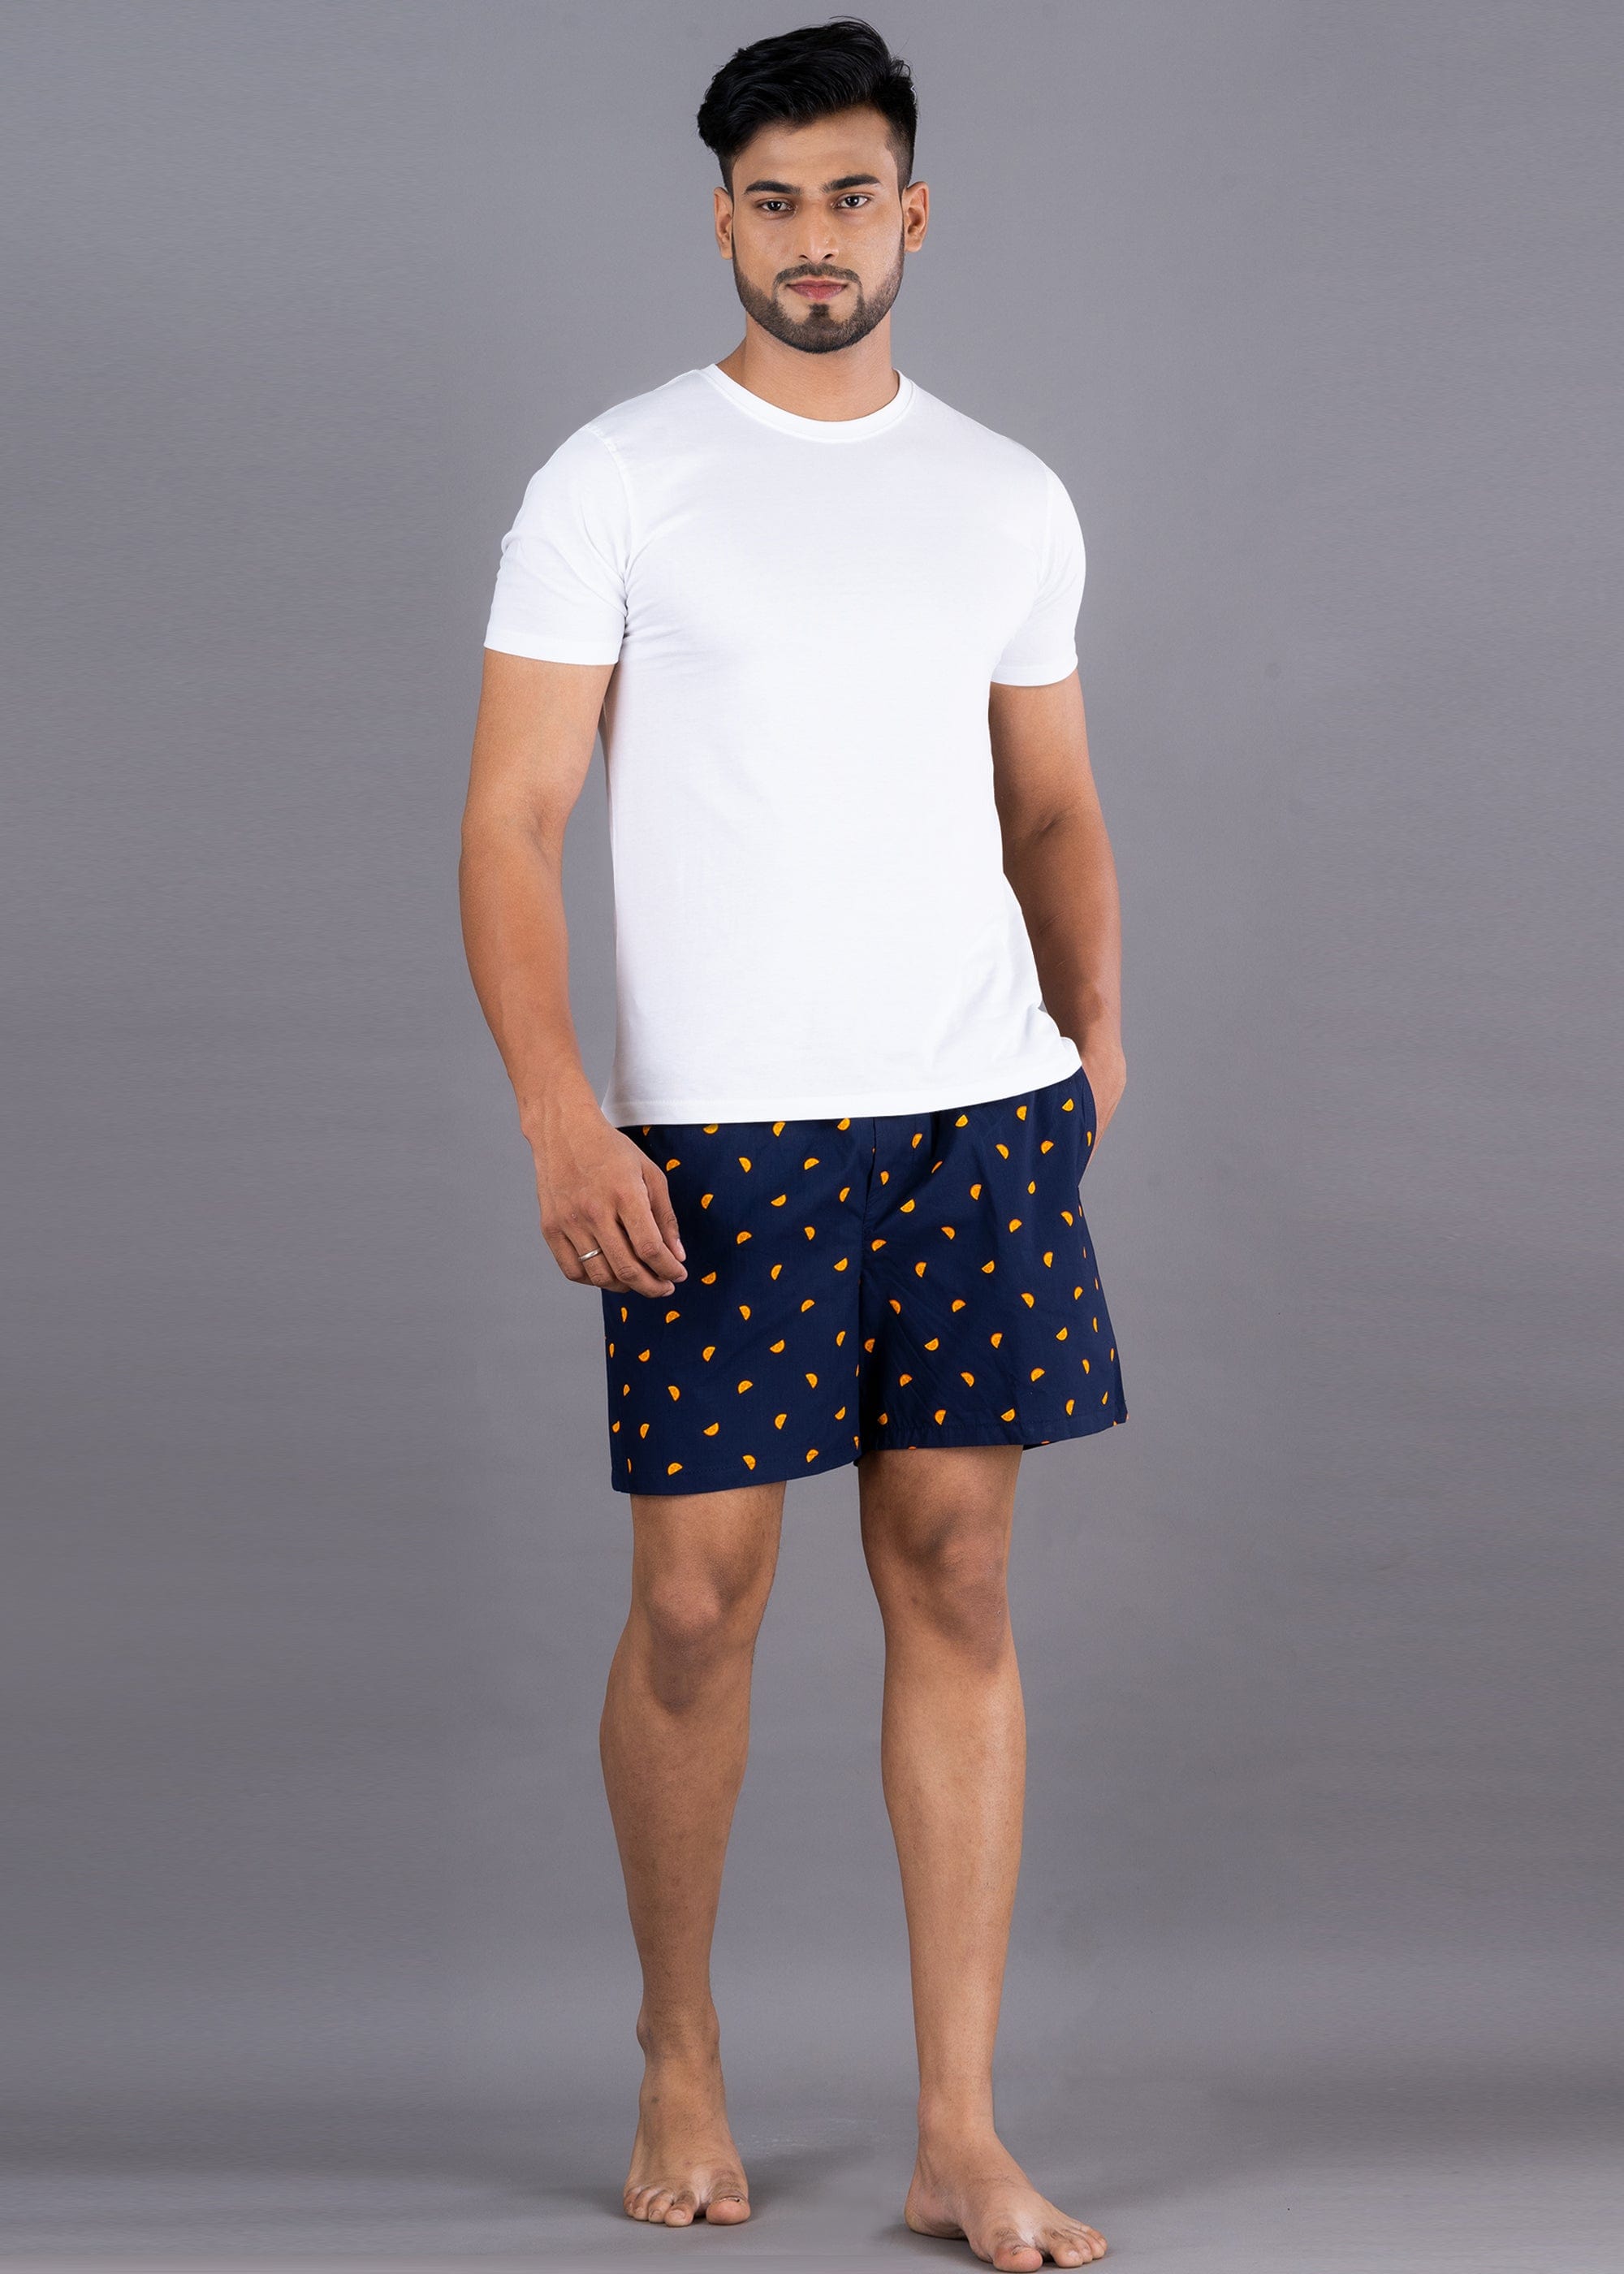 Premium Cotton Nightwear Set For Men